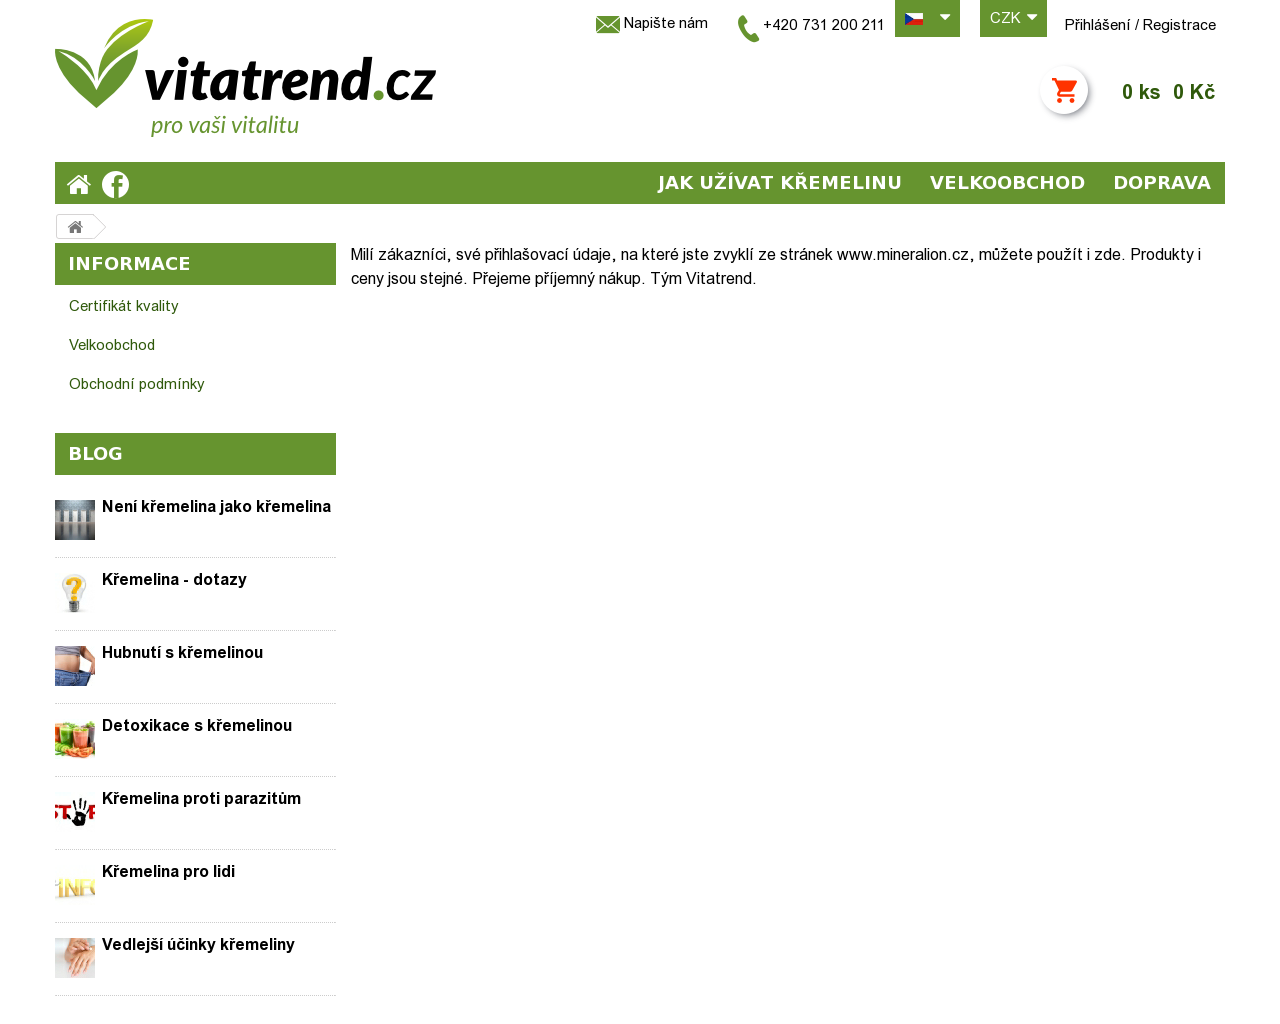 Site Image vitatrend.cz v 1280x1024